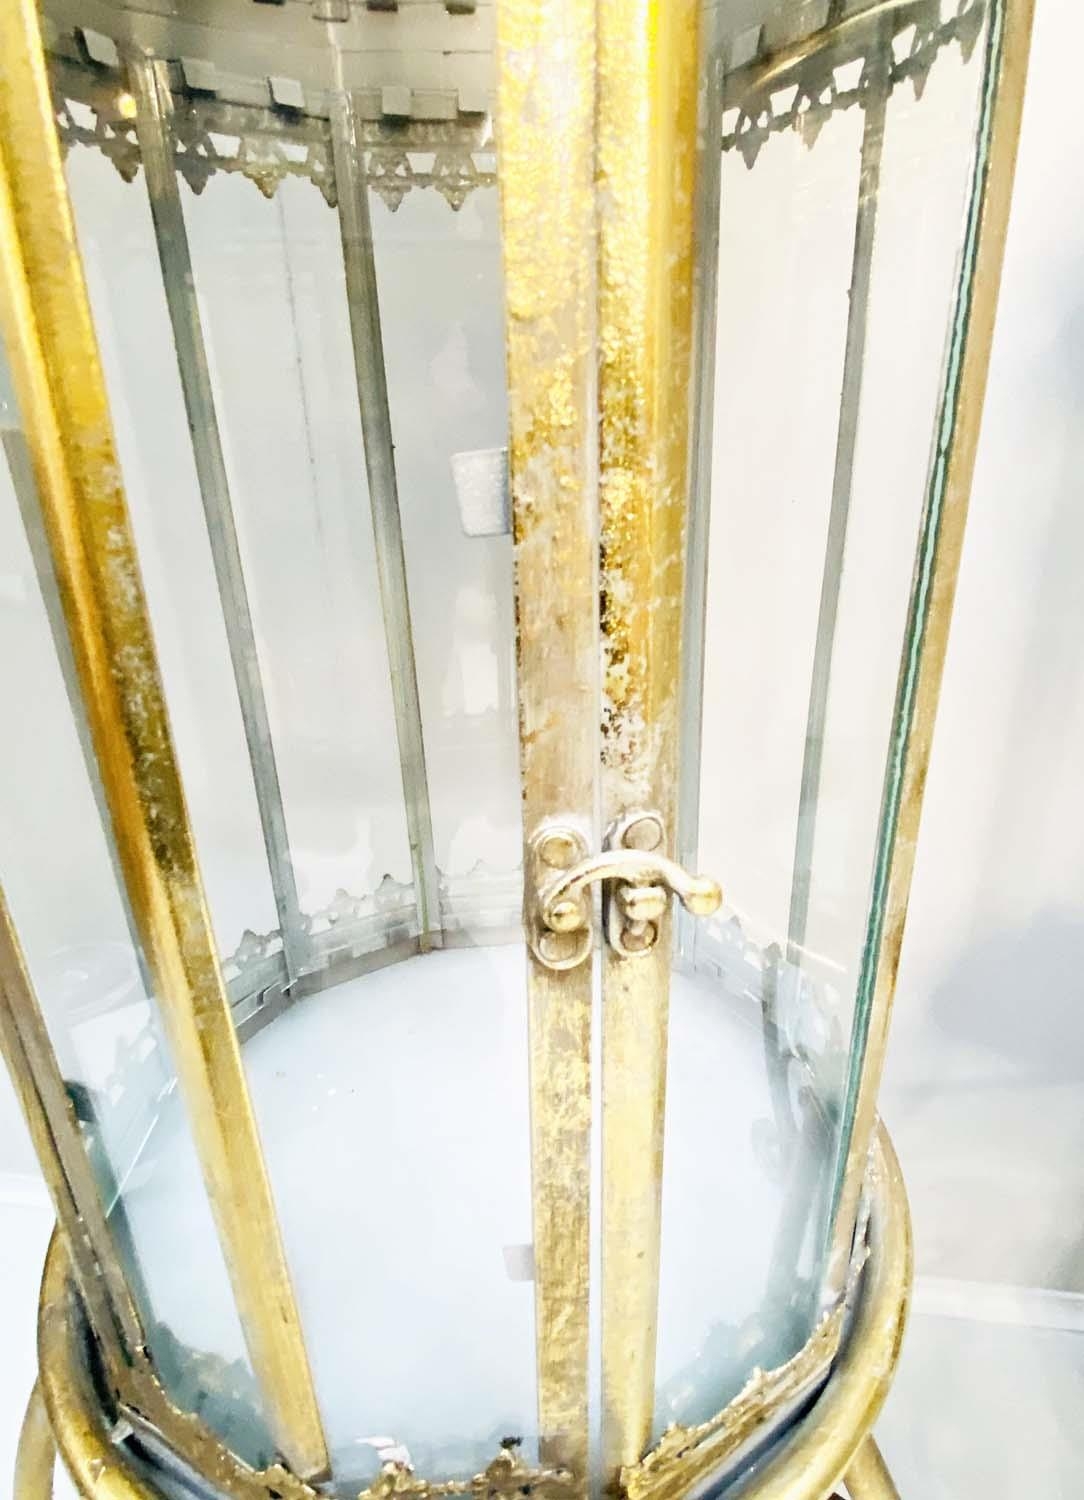 STORM LANTERNS ON STANDS, 115cm H x 34cm diam., Regency style, gilt metal frames. (2) - Image 3 of 5